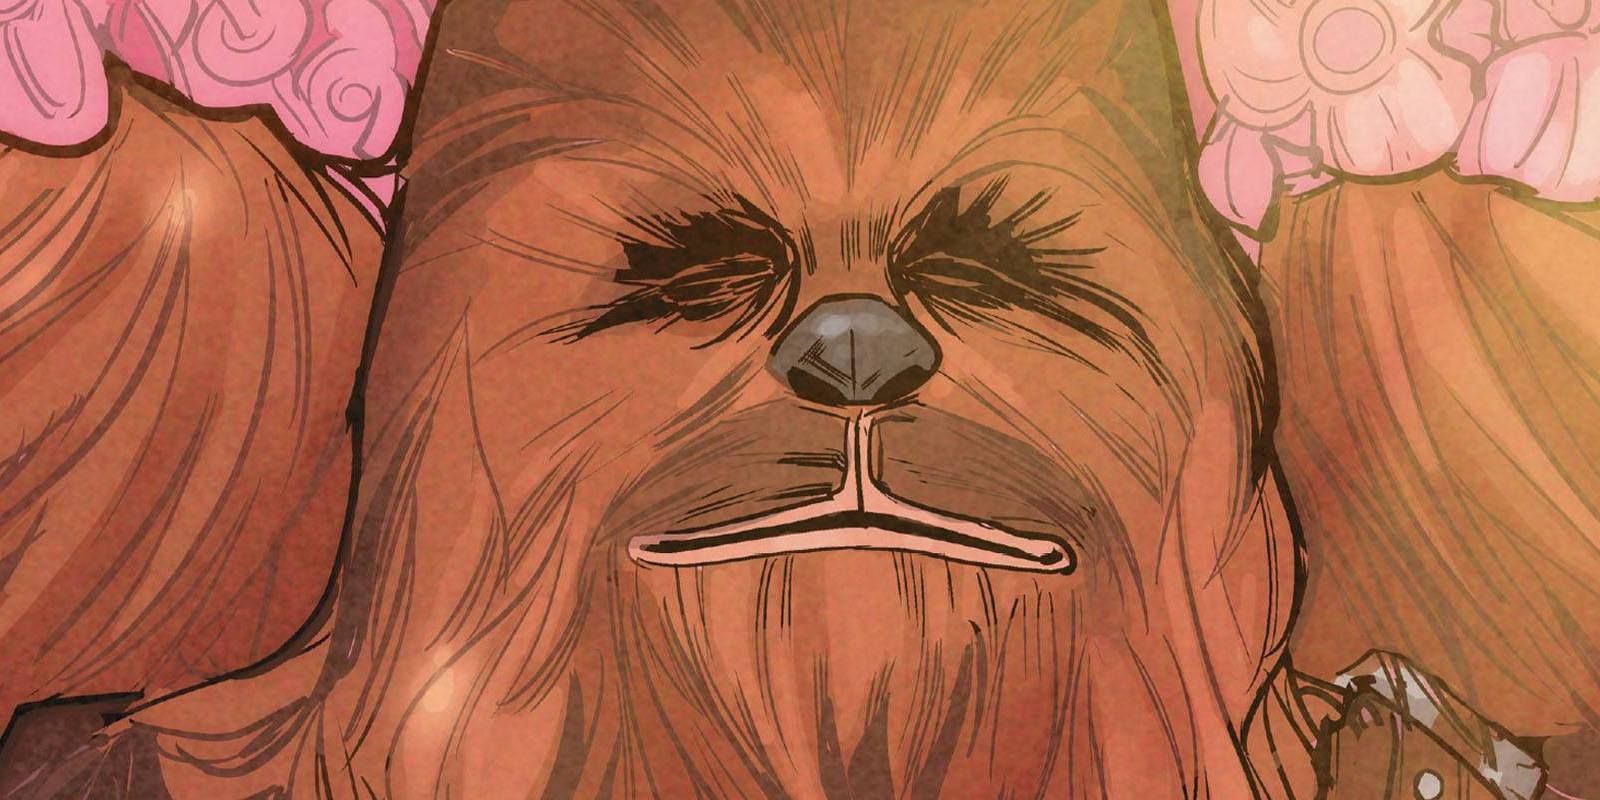 Chewbacca in Marvels Star Wars Comics